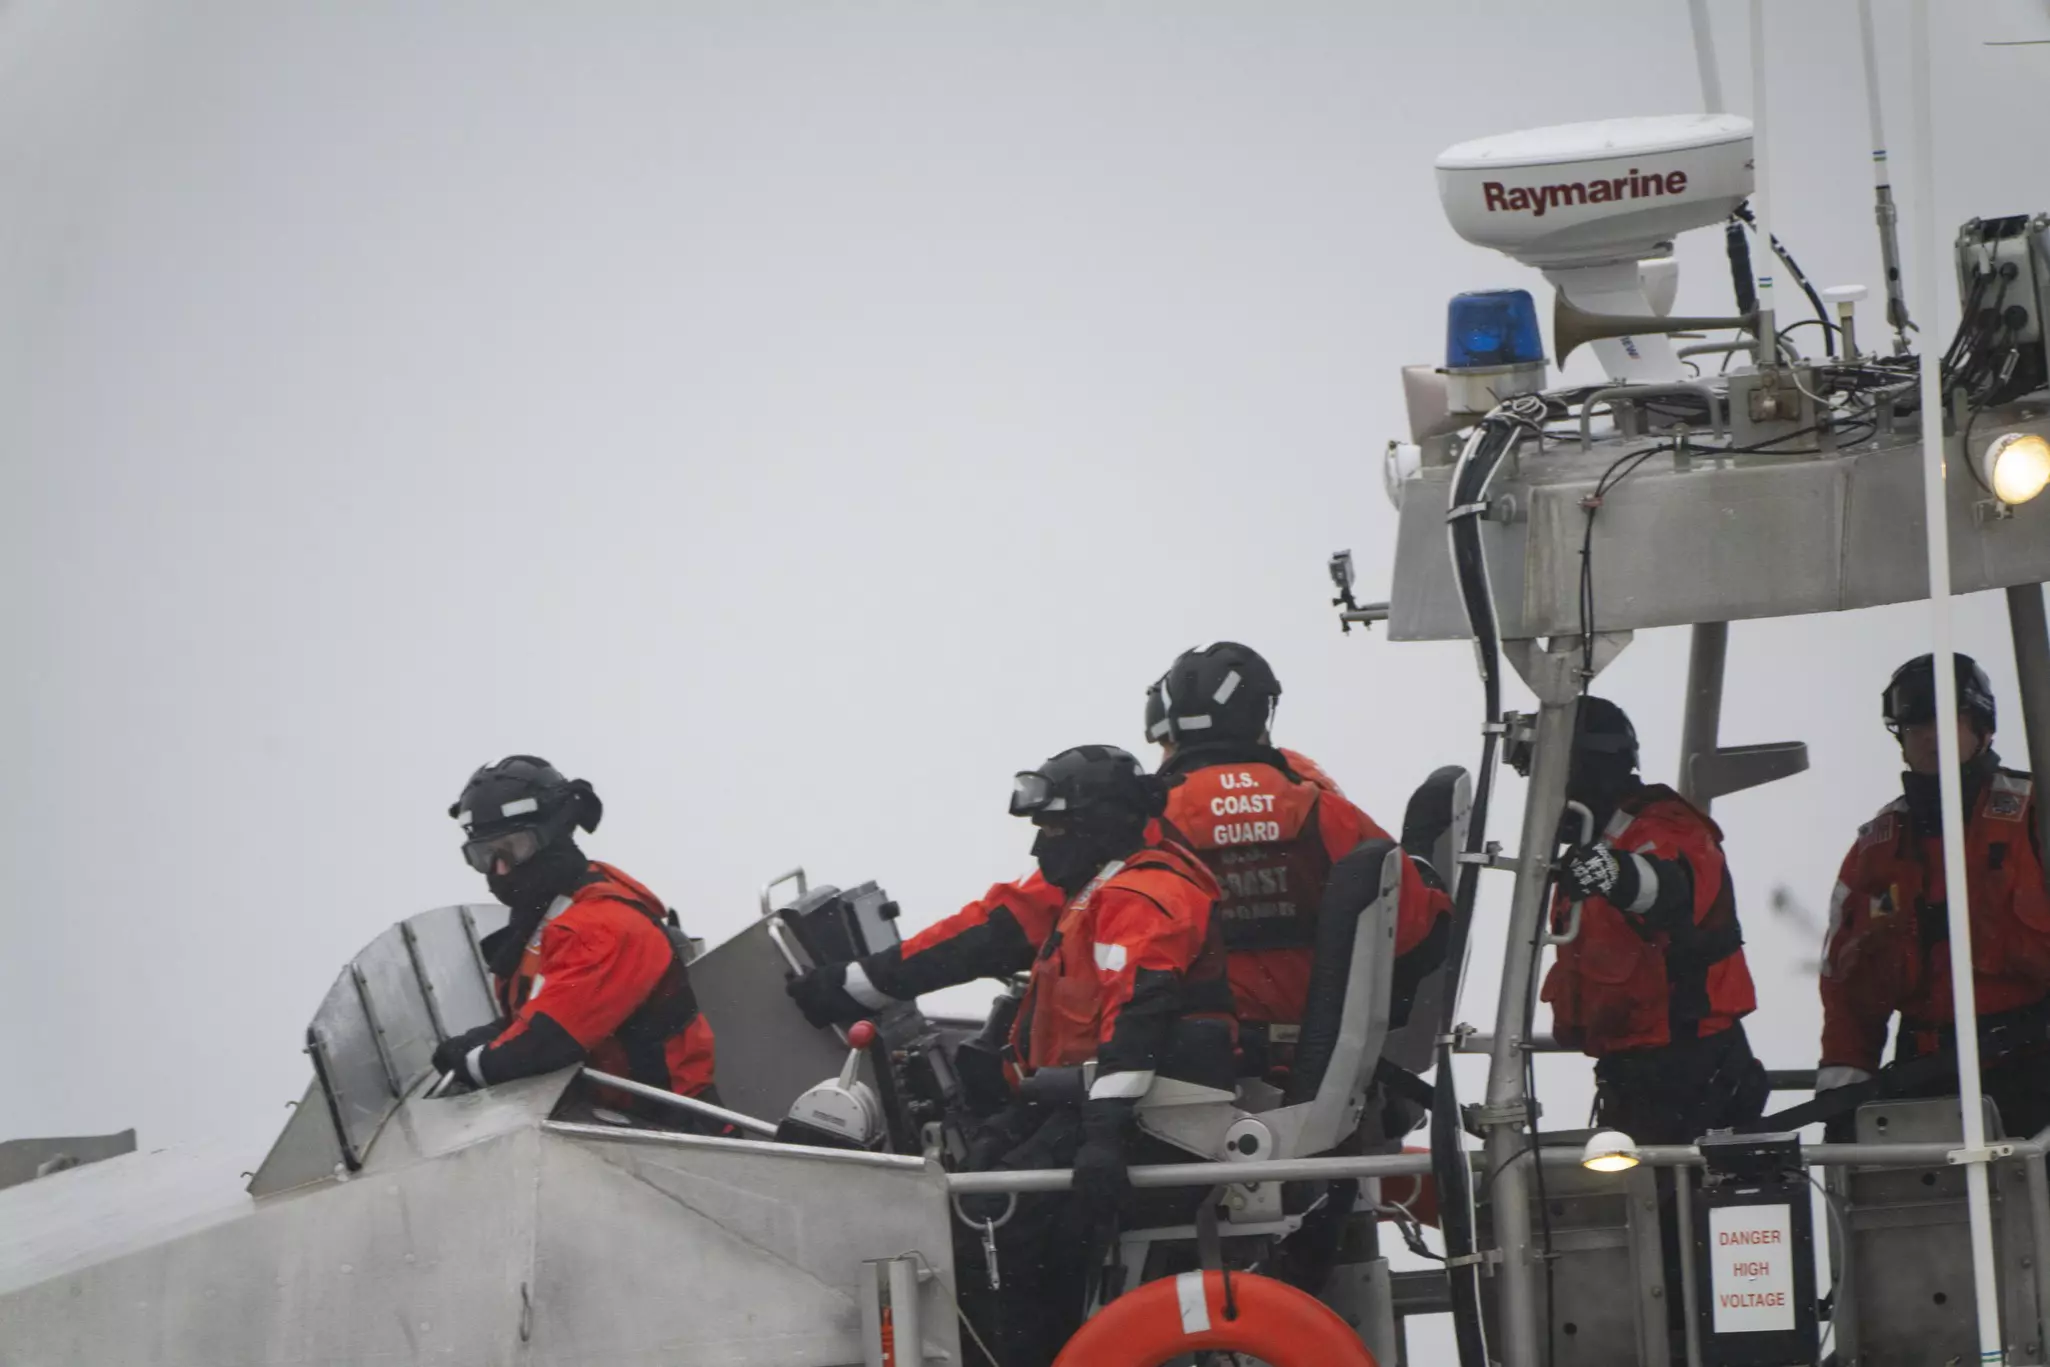 USCG Motor Life Boat training in rough seas